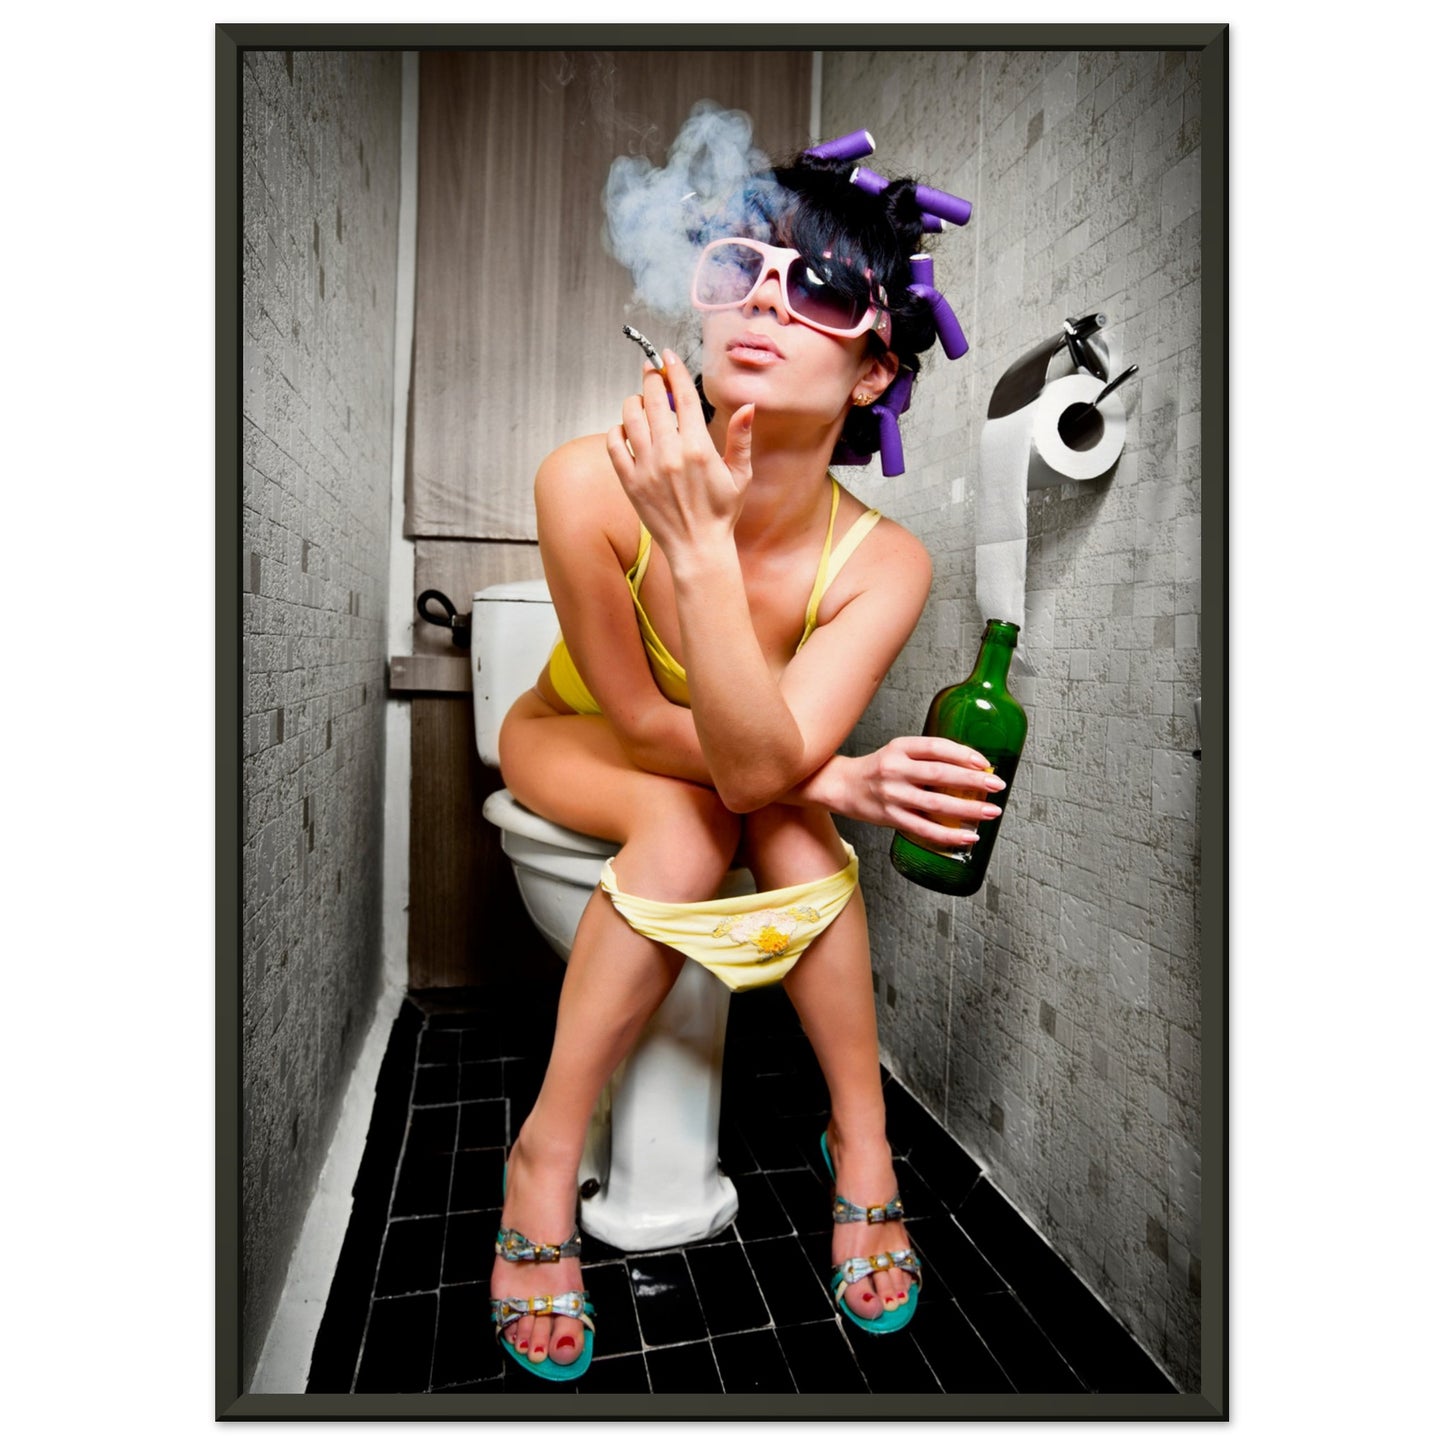 Smoking Girl on Toilet